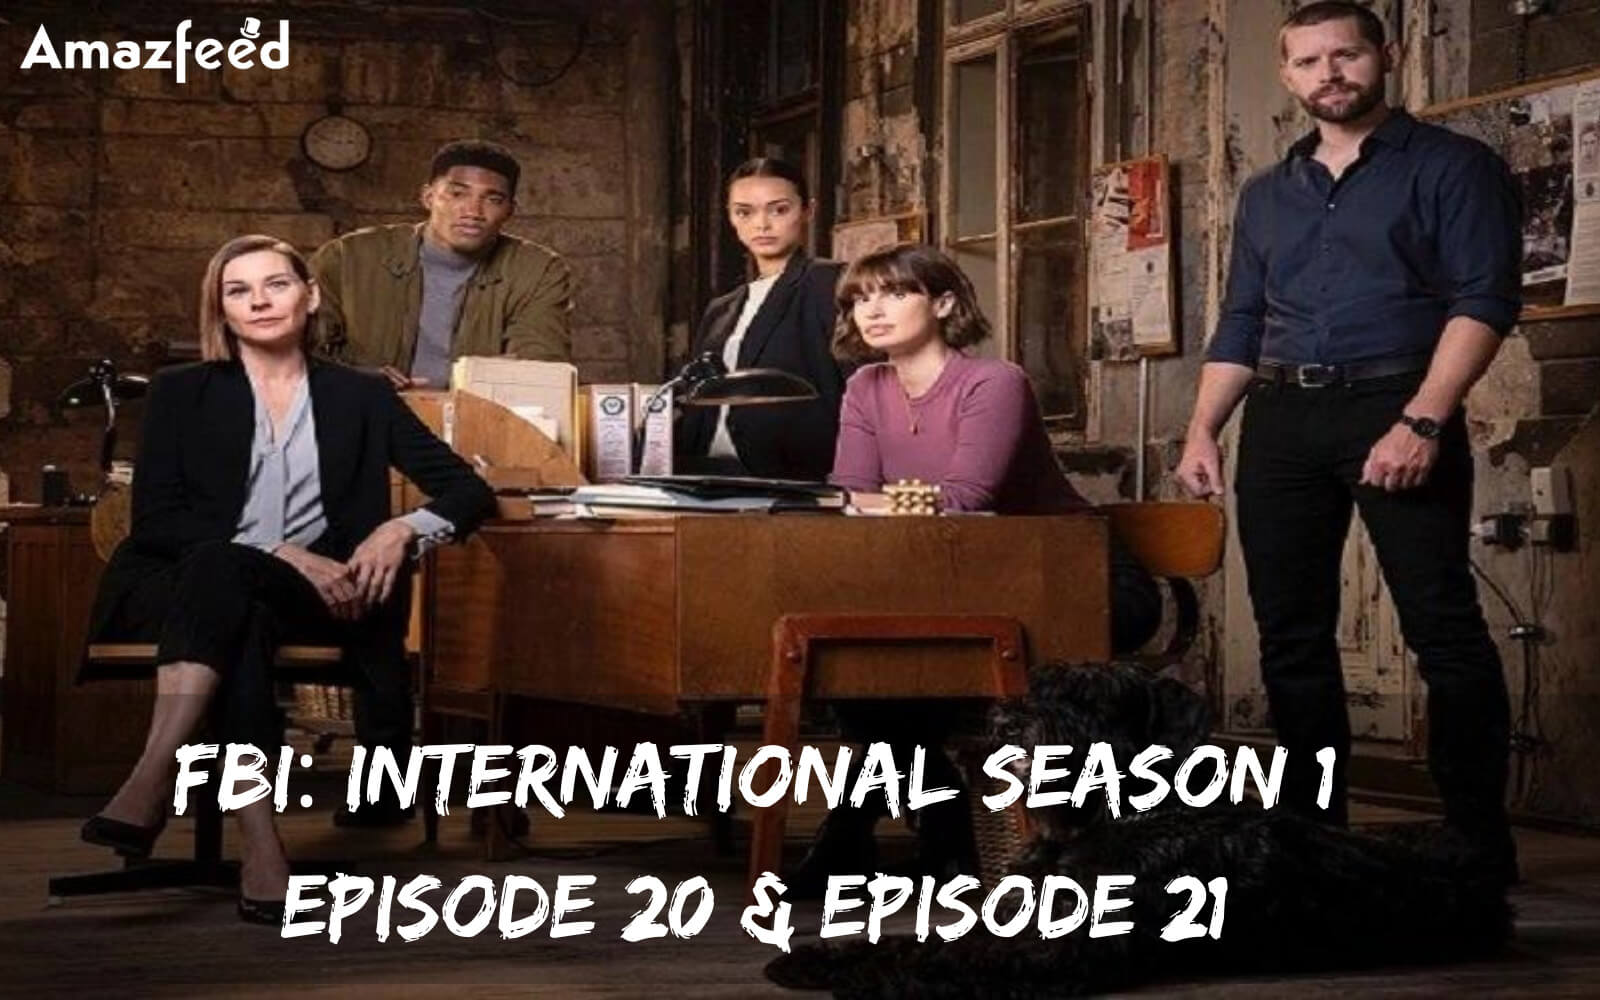 FBI International Season 1 Episode 20 release date